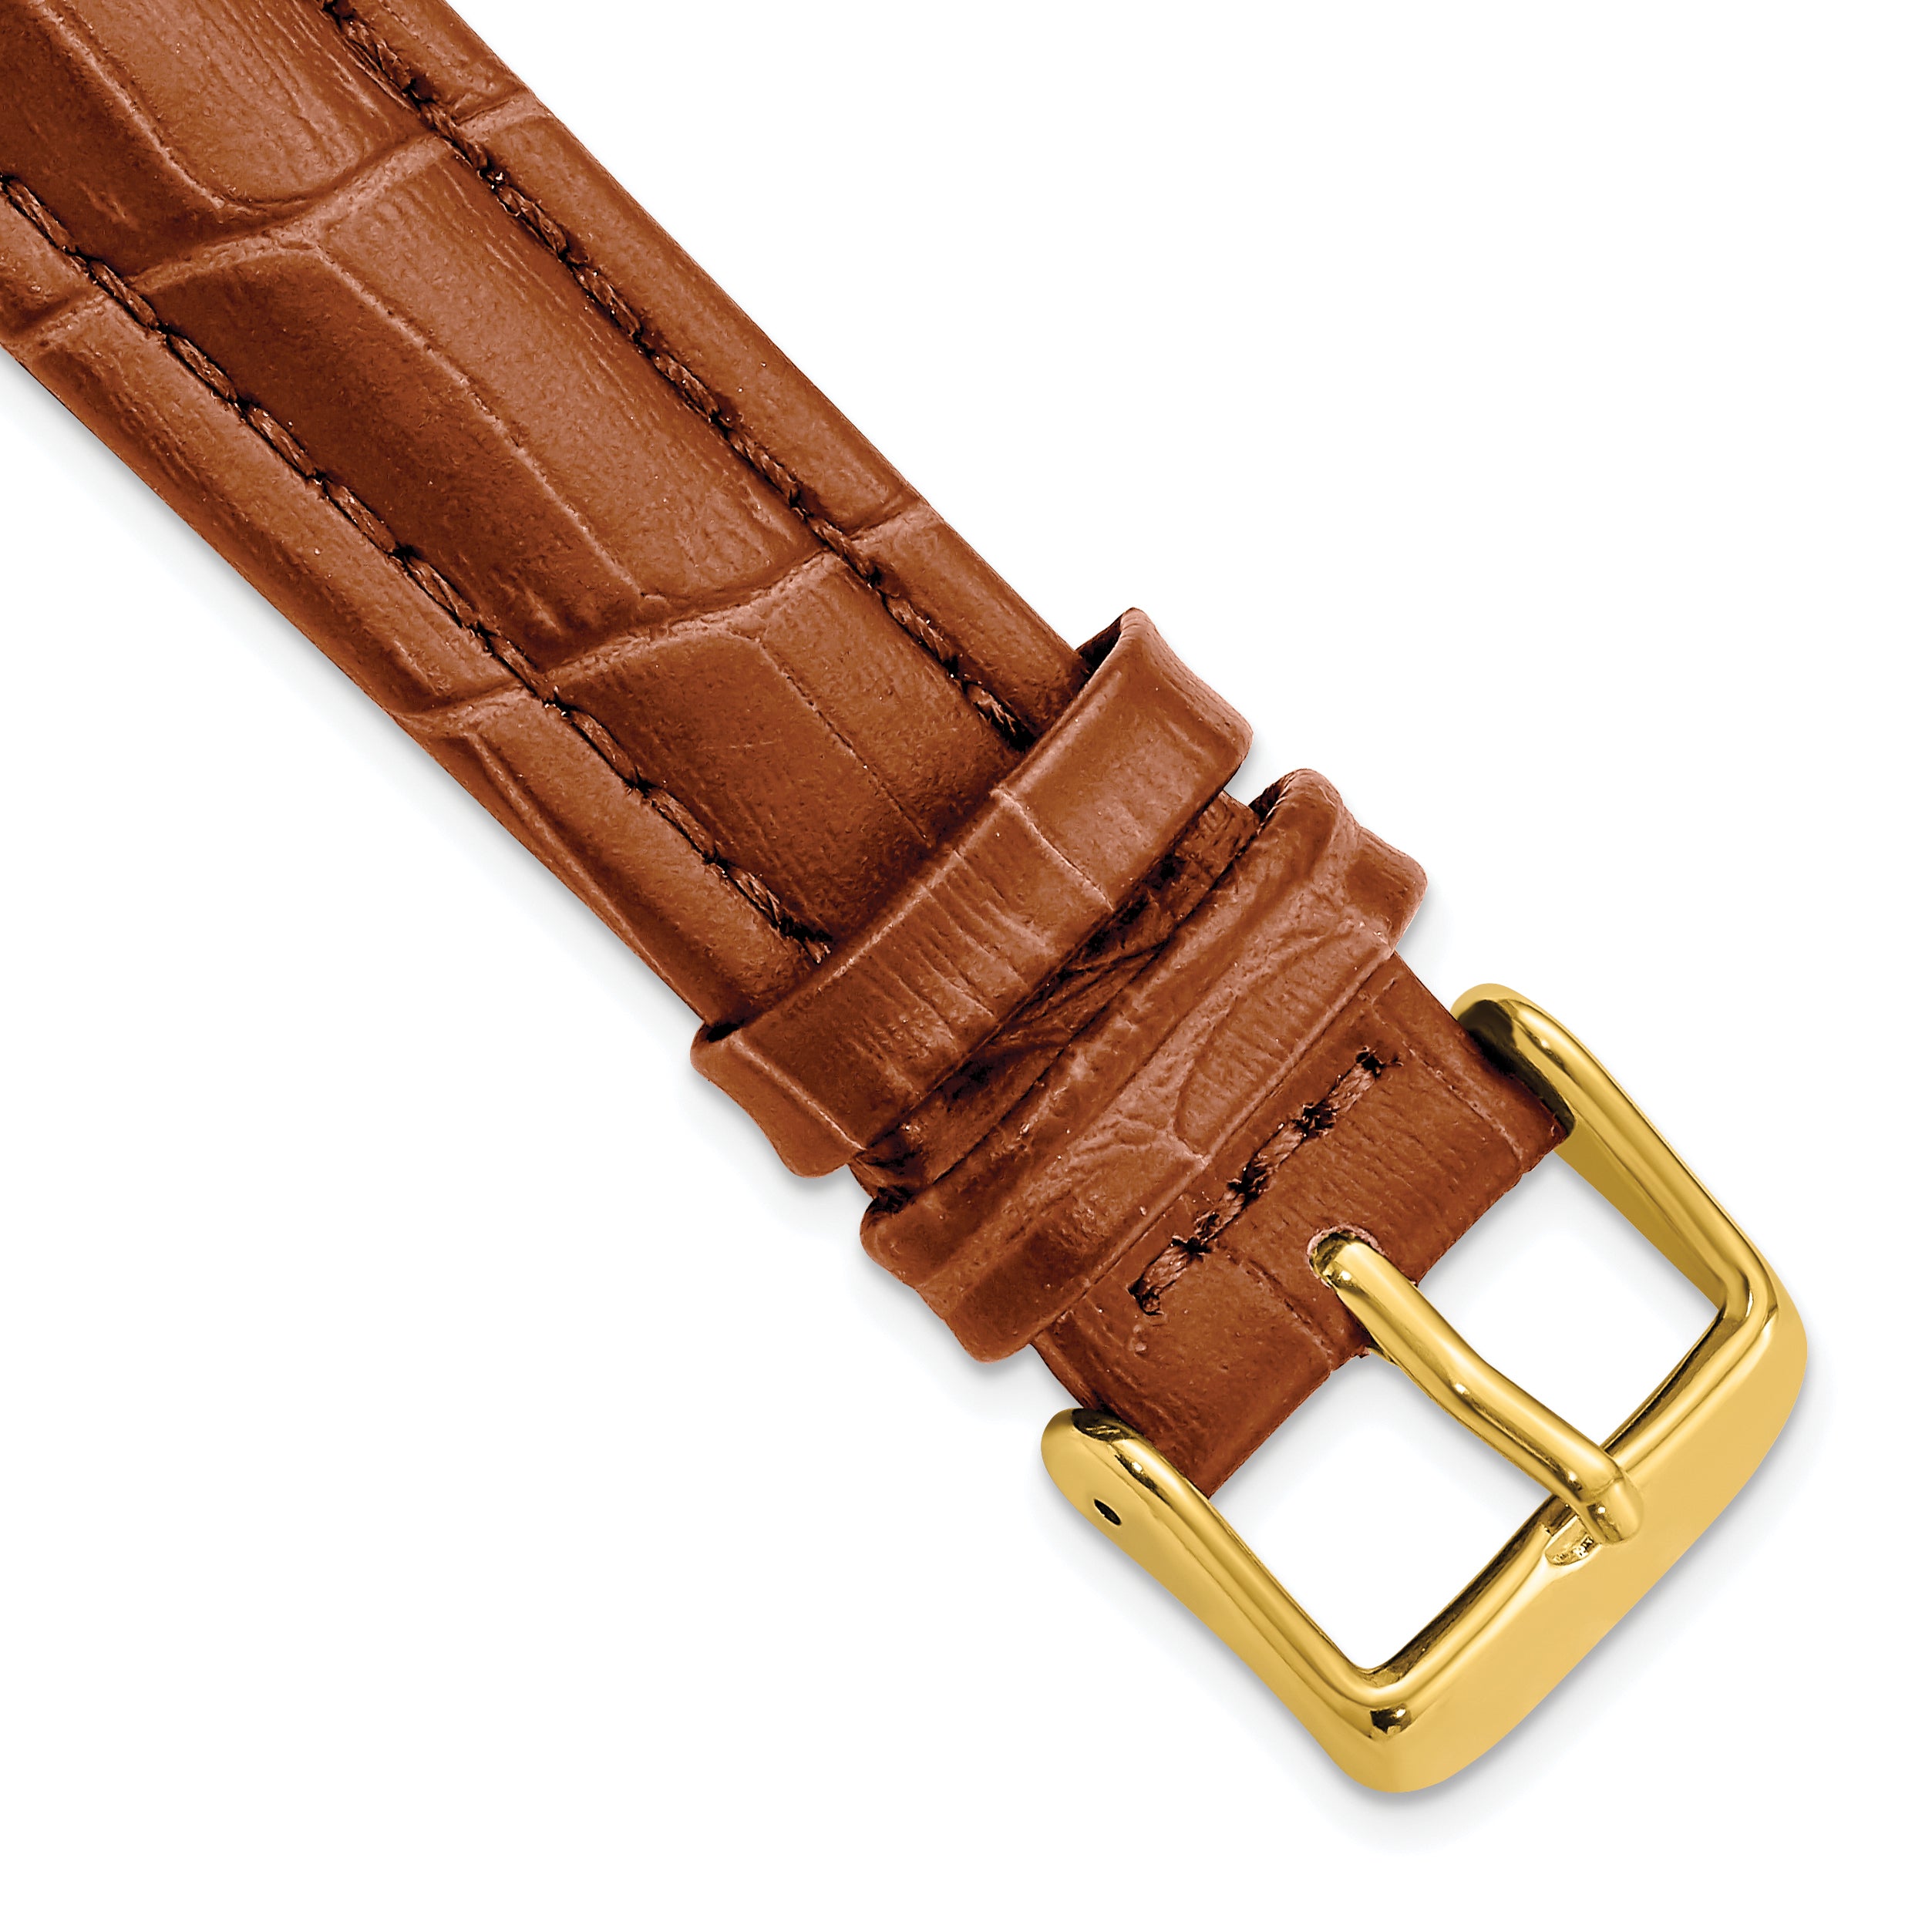 DeBeer 18mm Havana Matte Alligator Grain Leather with Gold-tone Buckle 7.5 inch Watch Band